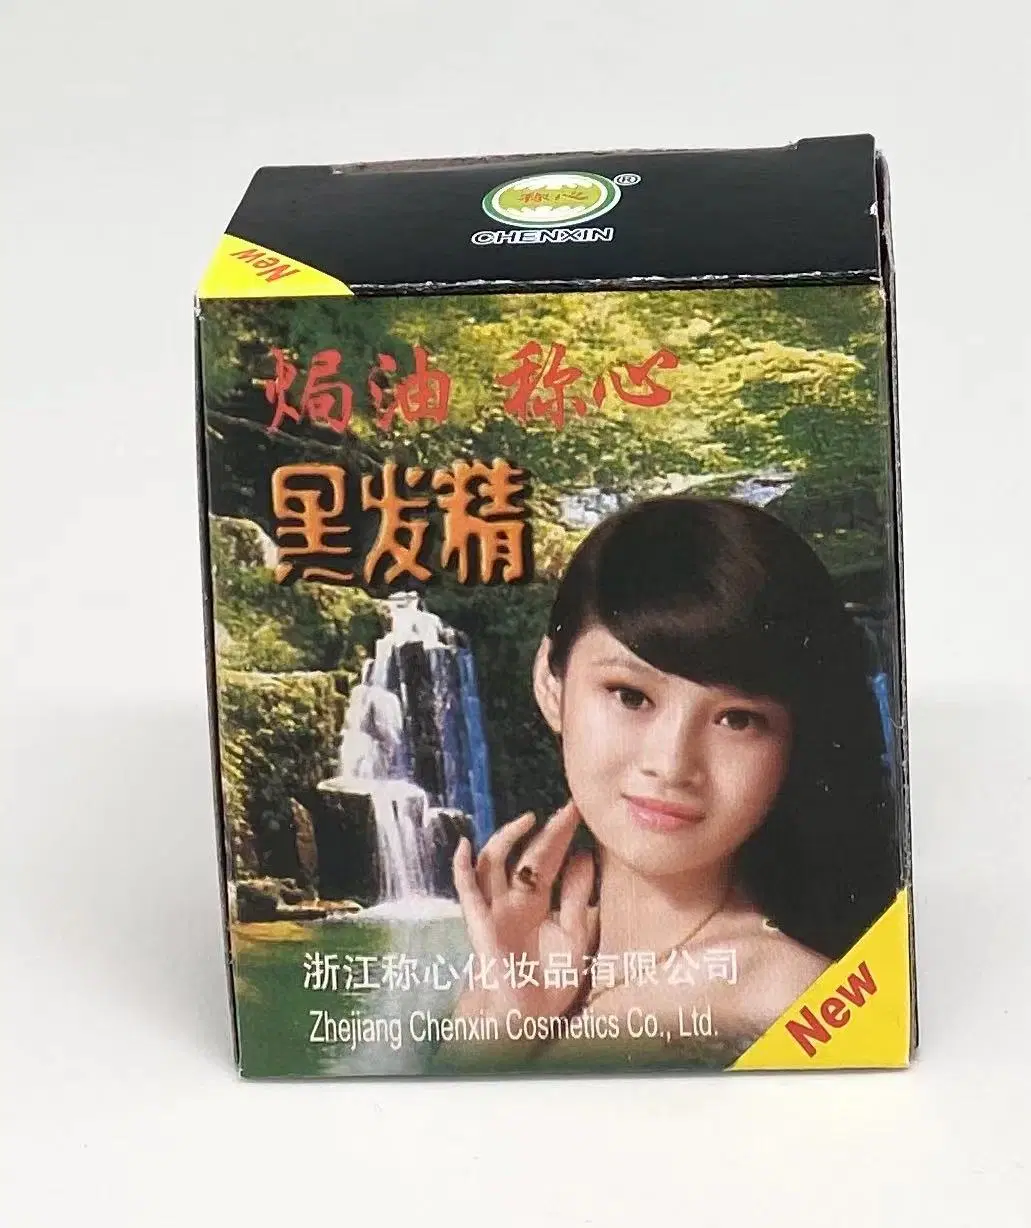 Perpetual Chenxin Hair Blackening Cream